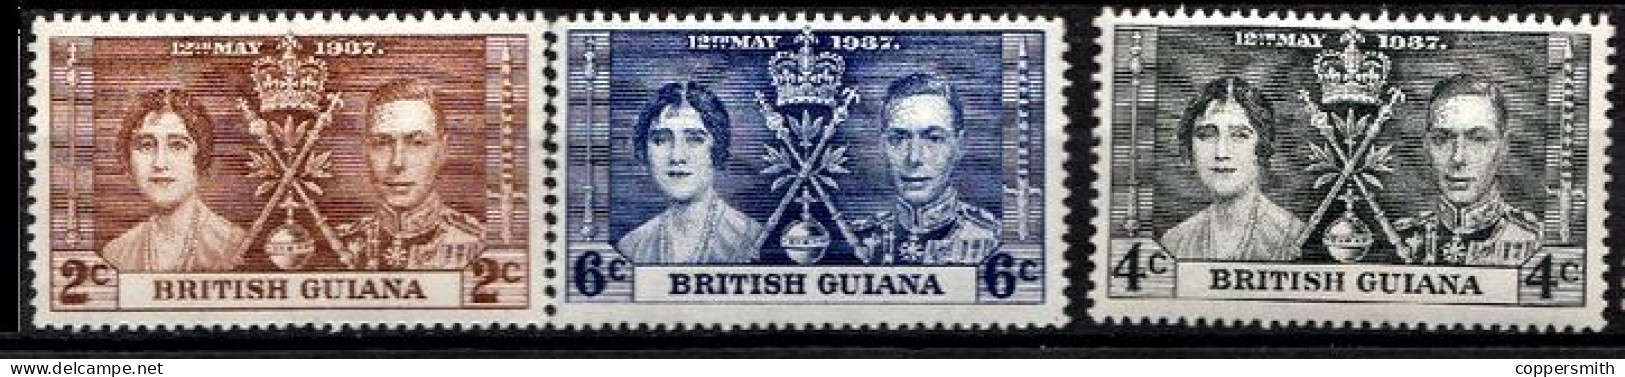 (018) Guyana / Guyane  Coronation / Krönung / 1937  ** / Mnh  Michel 173-175 - Guyane (1966-...)